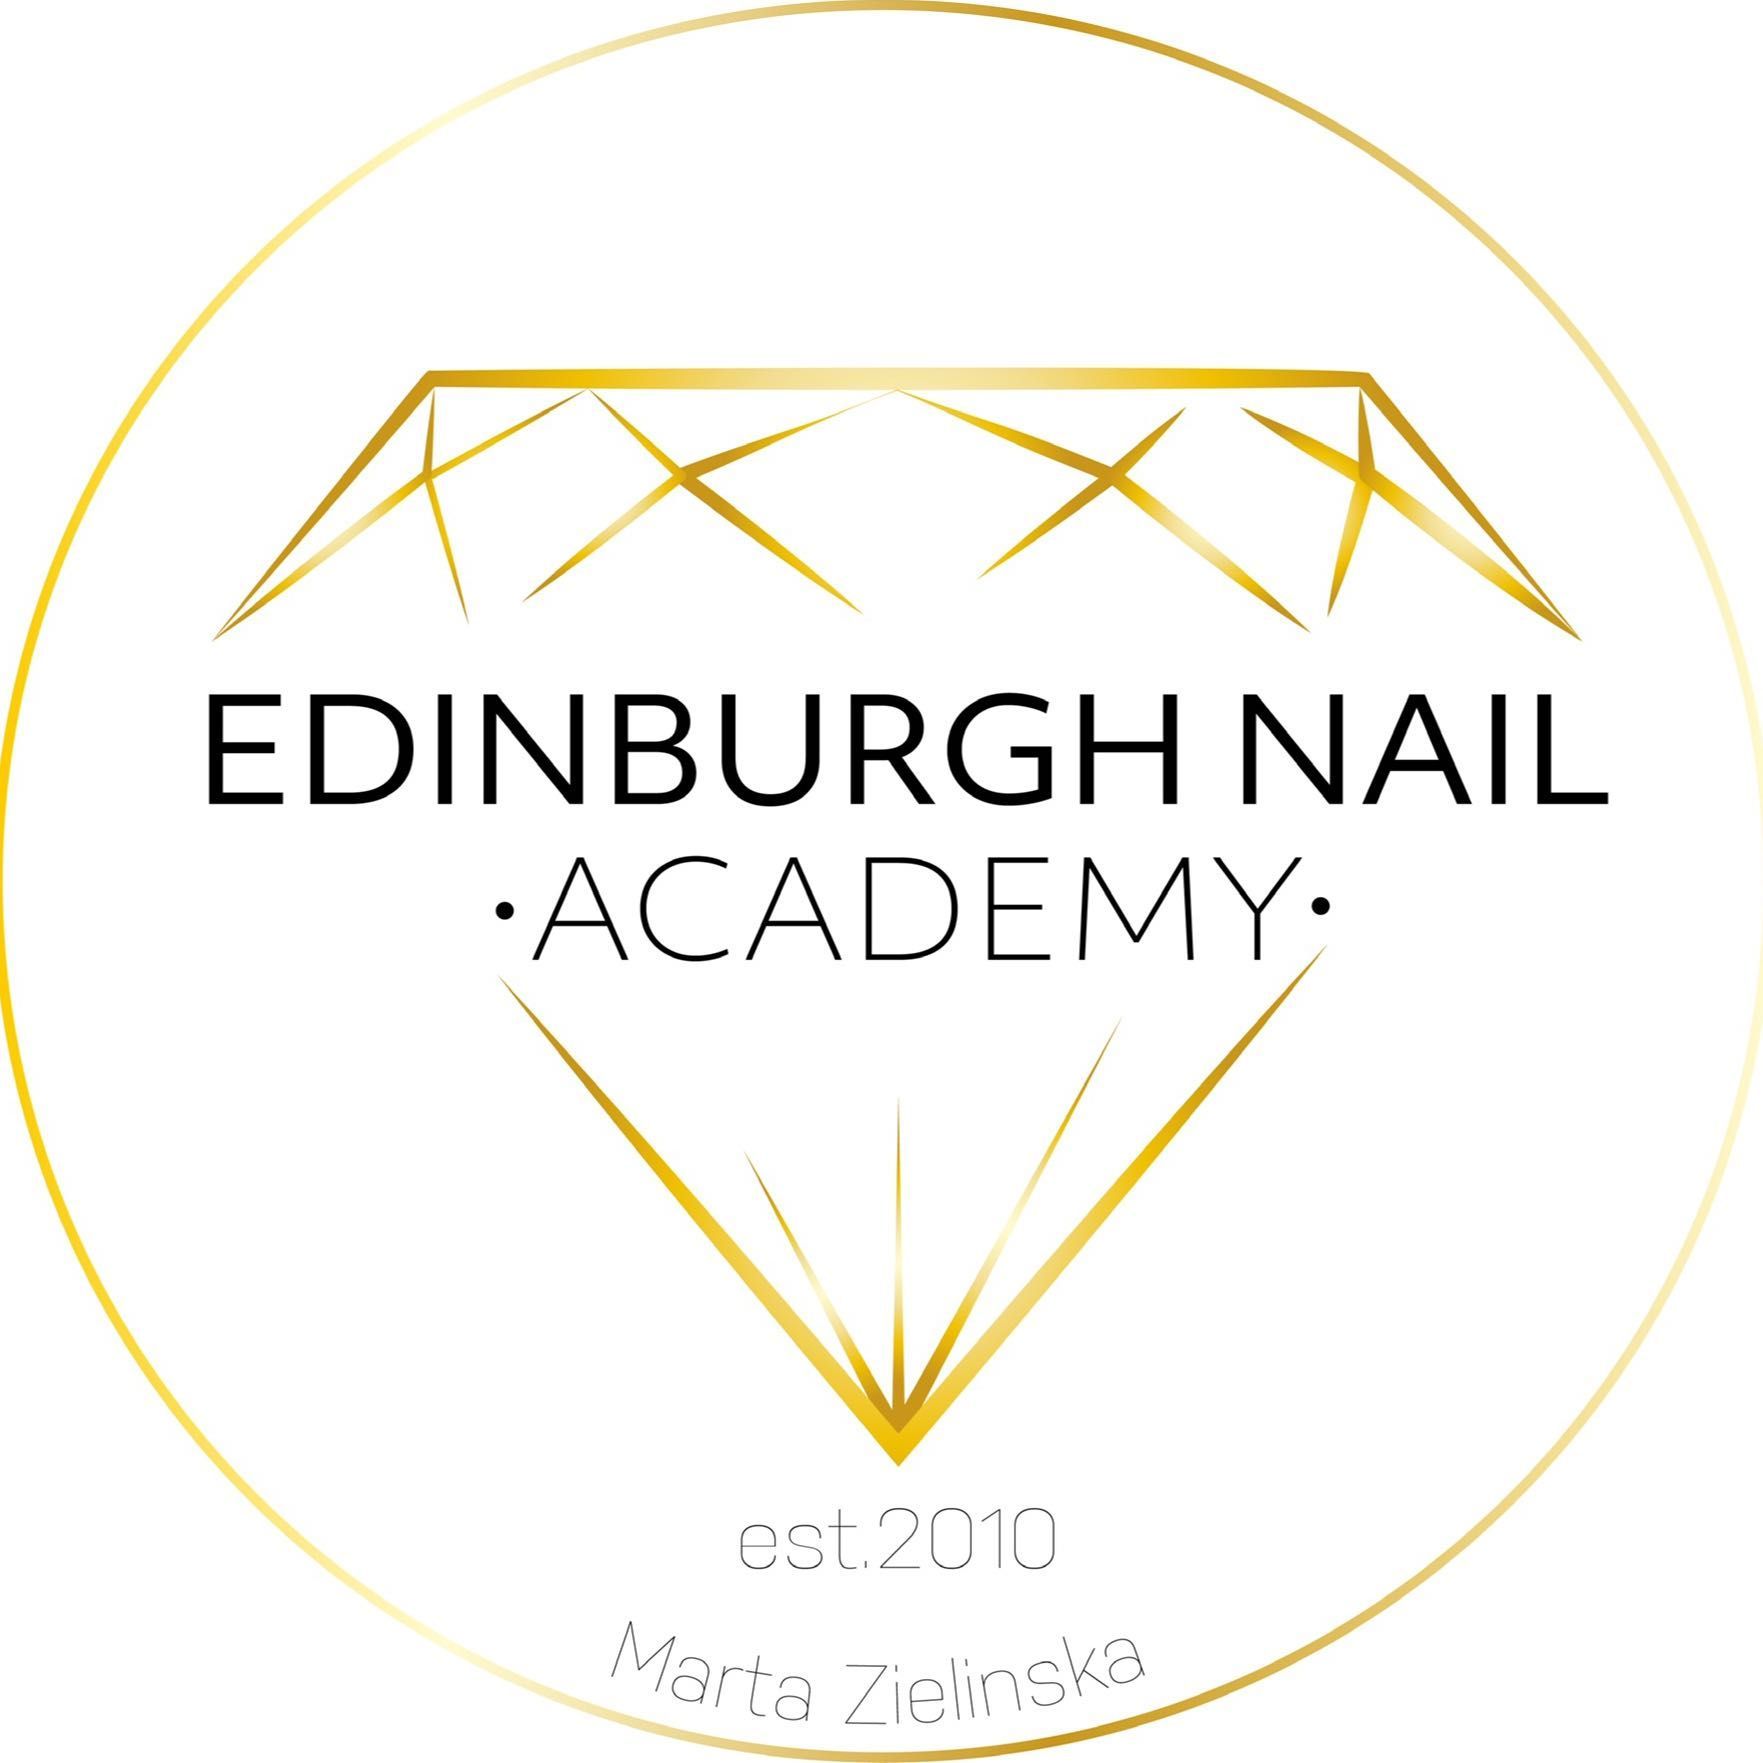 Edinburgh Nail Academy, 28 William Street, EH3 7LJ, Edinburgh